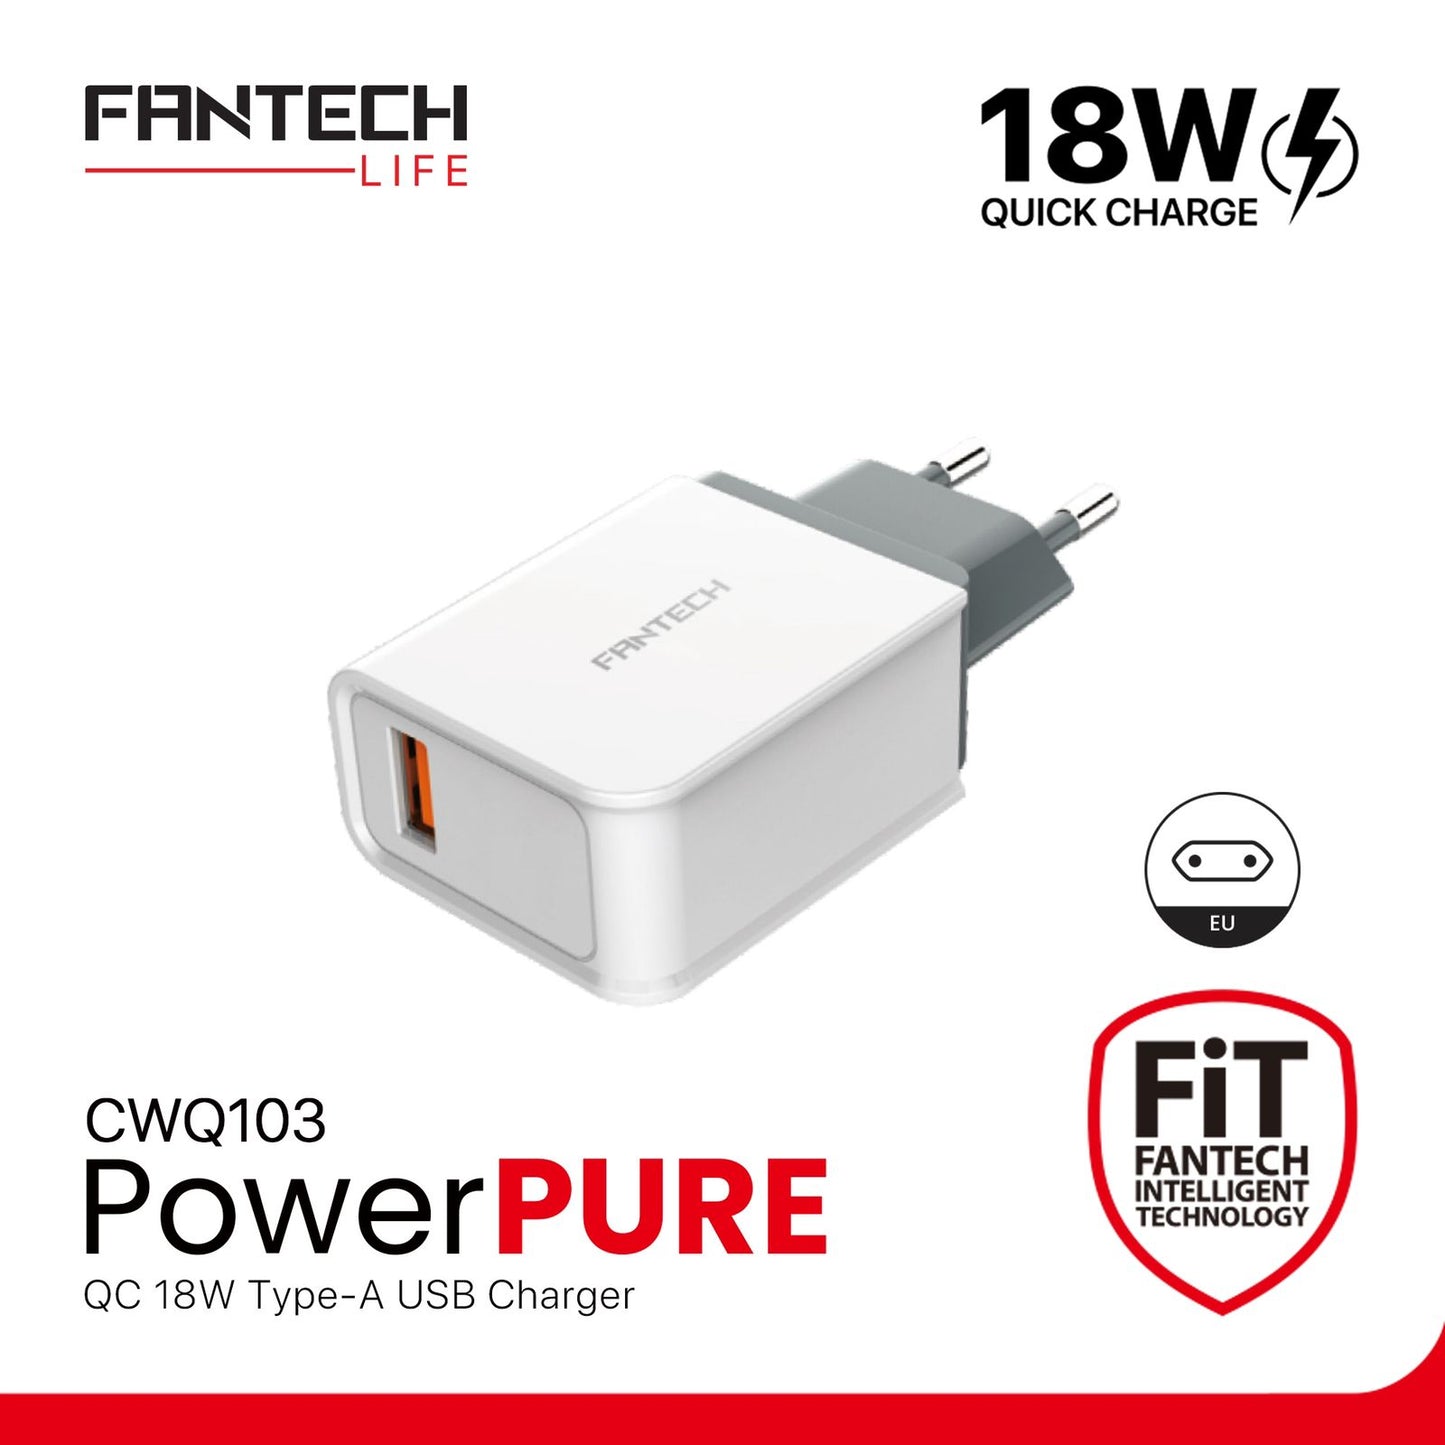 Fantech power pure 18w usb